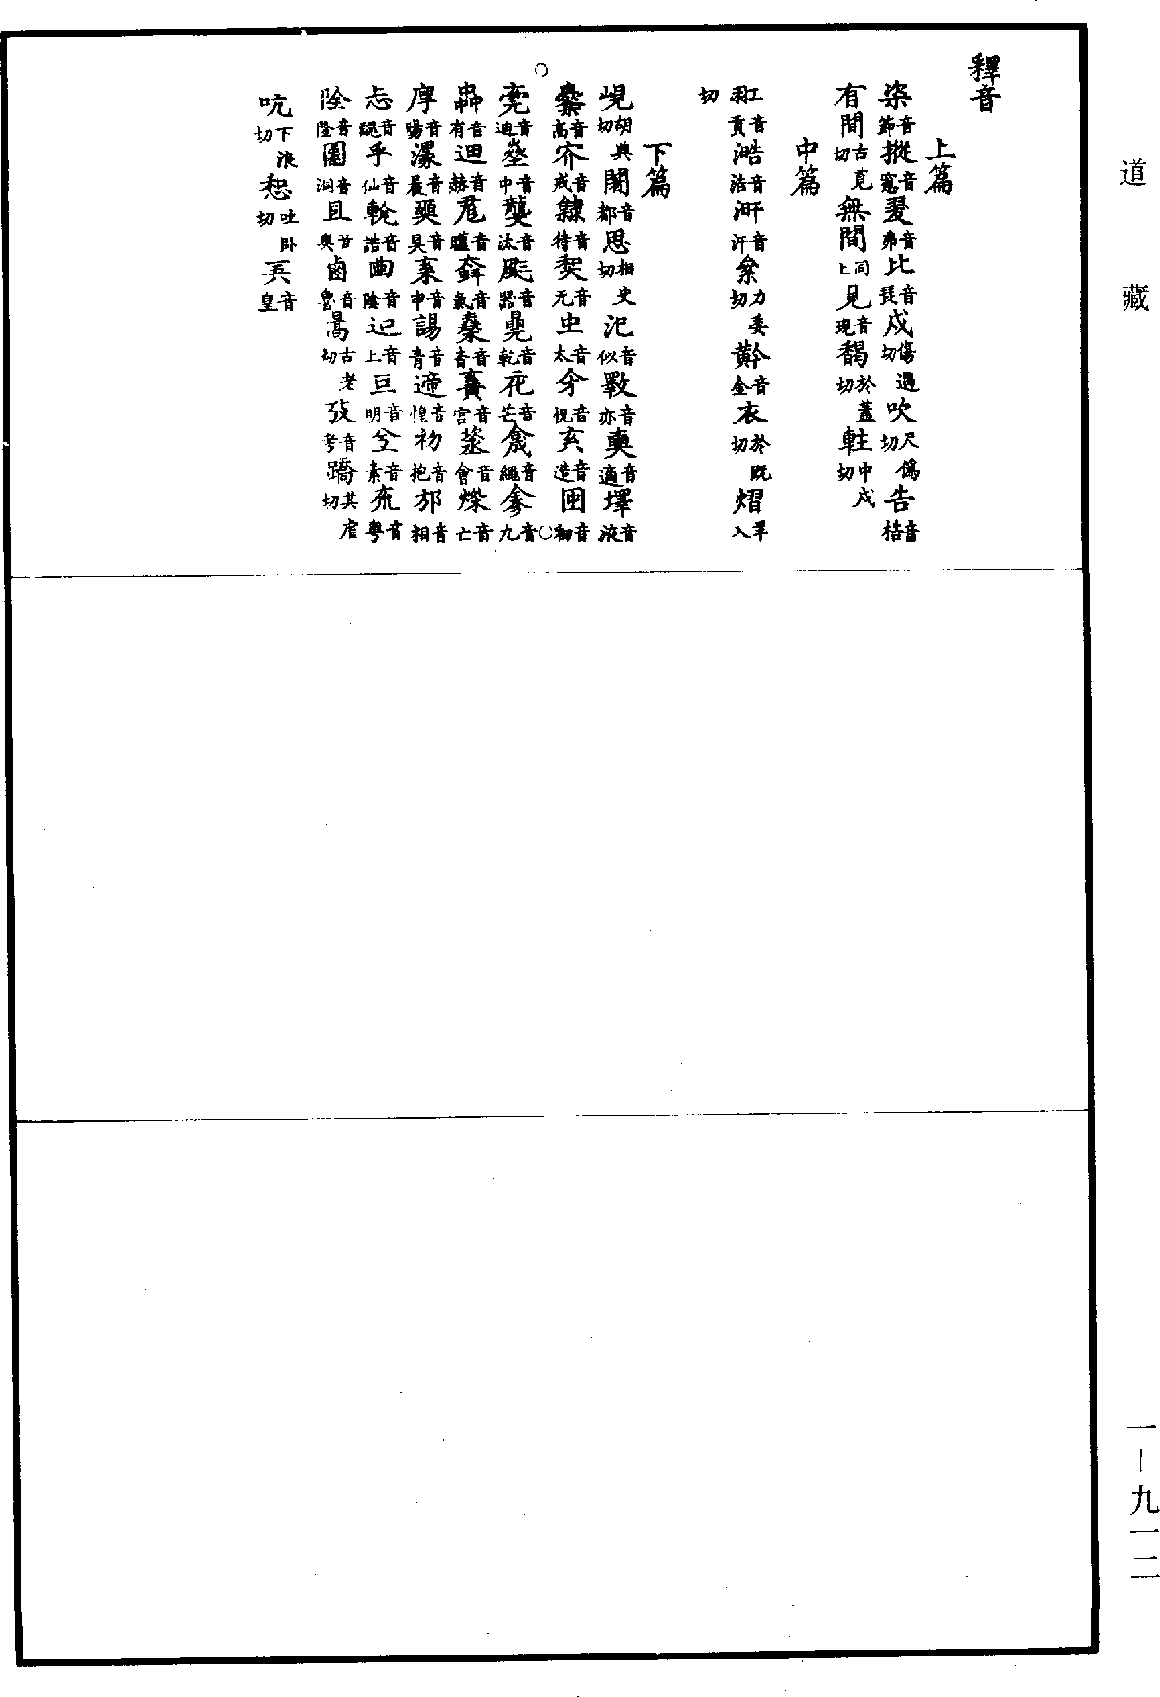 File:《道藏》第1冊 第912頁.png